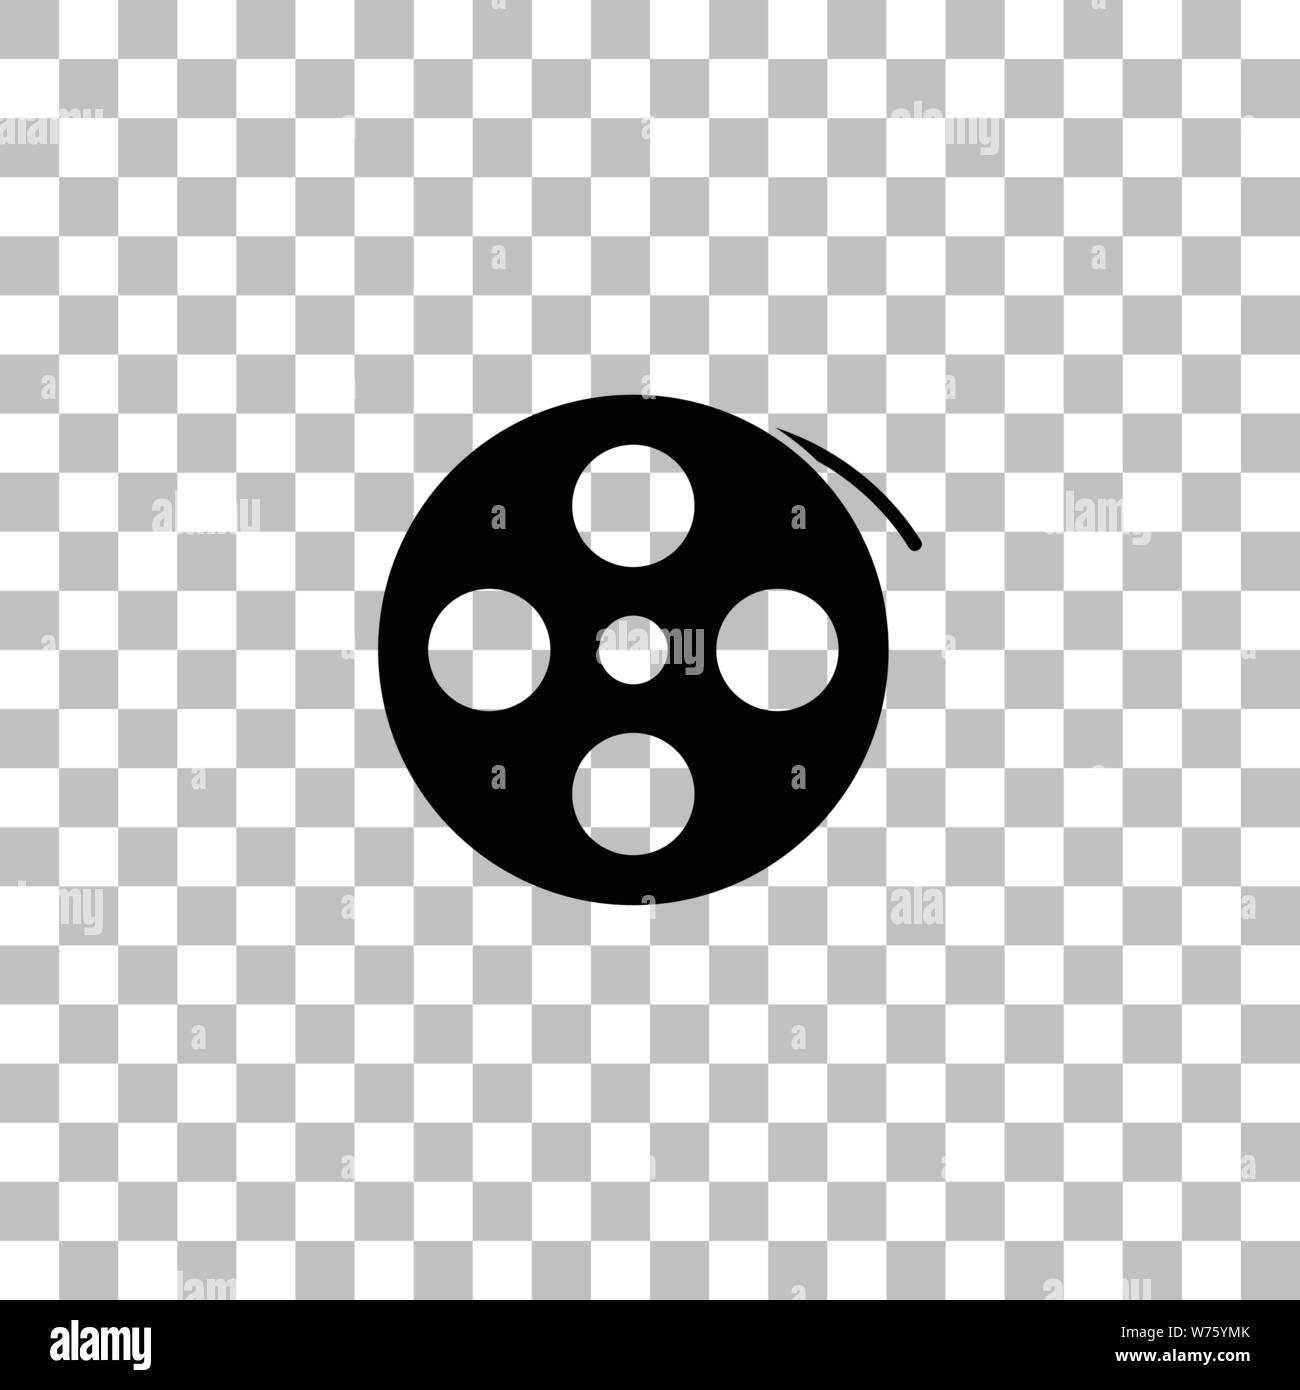 Reel film. Black flat icon on a transparent background. Pictogram